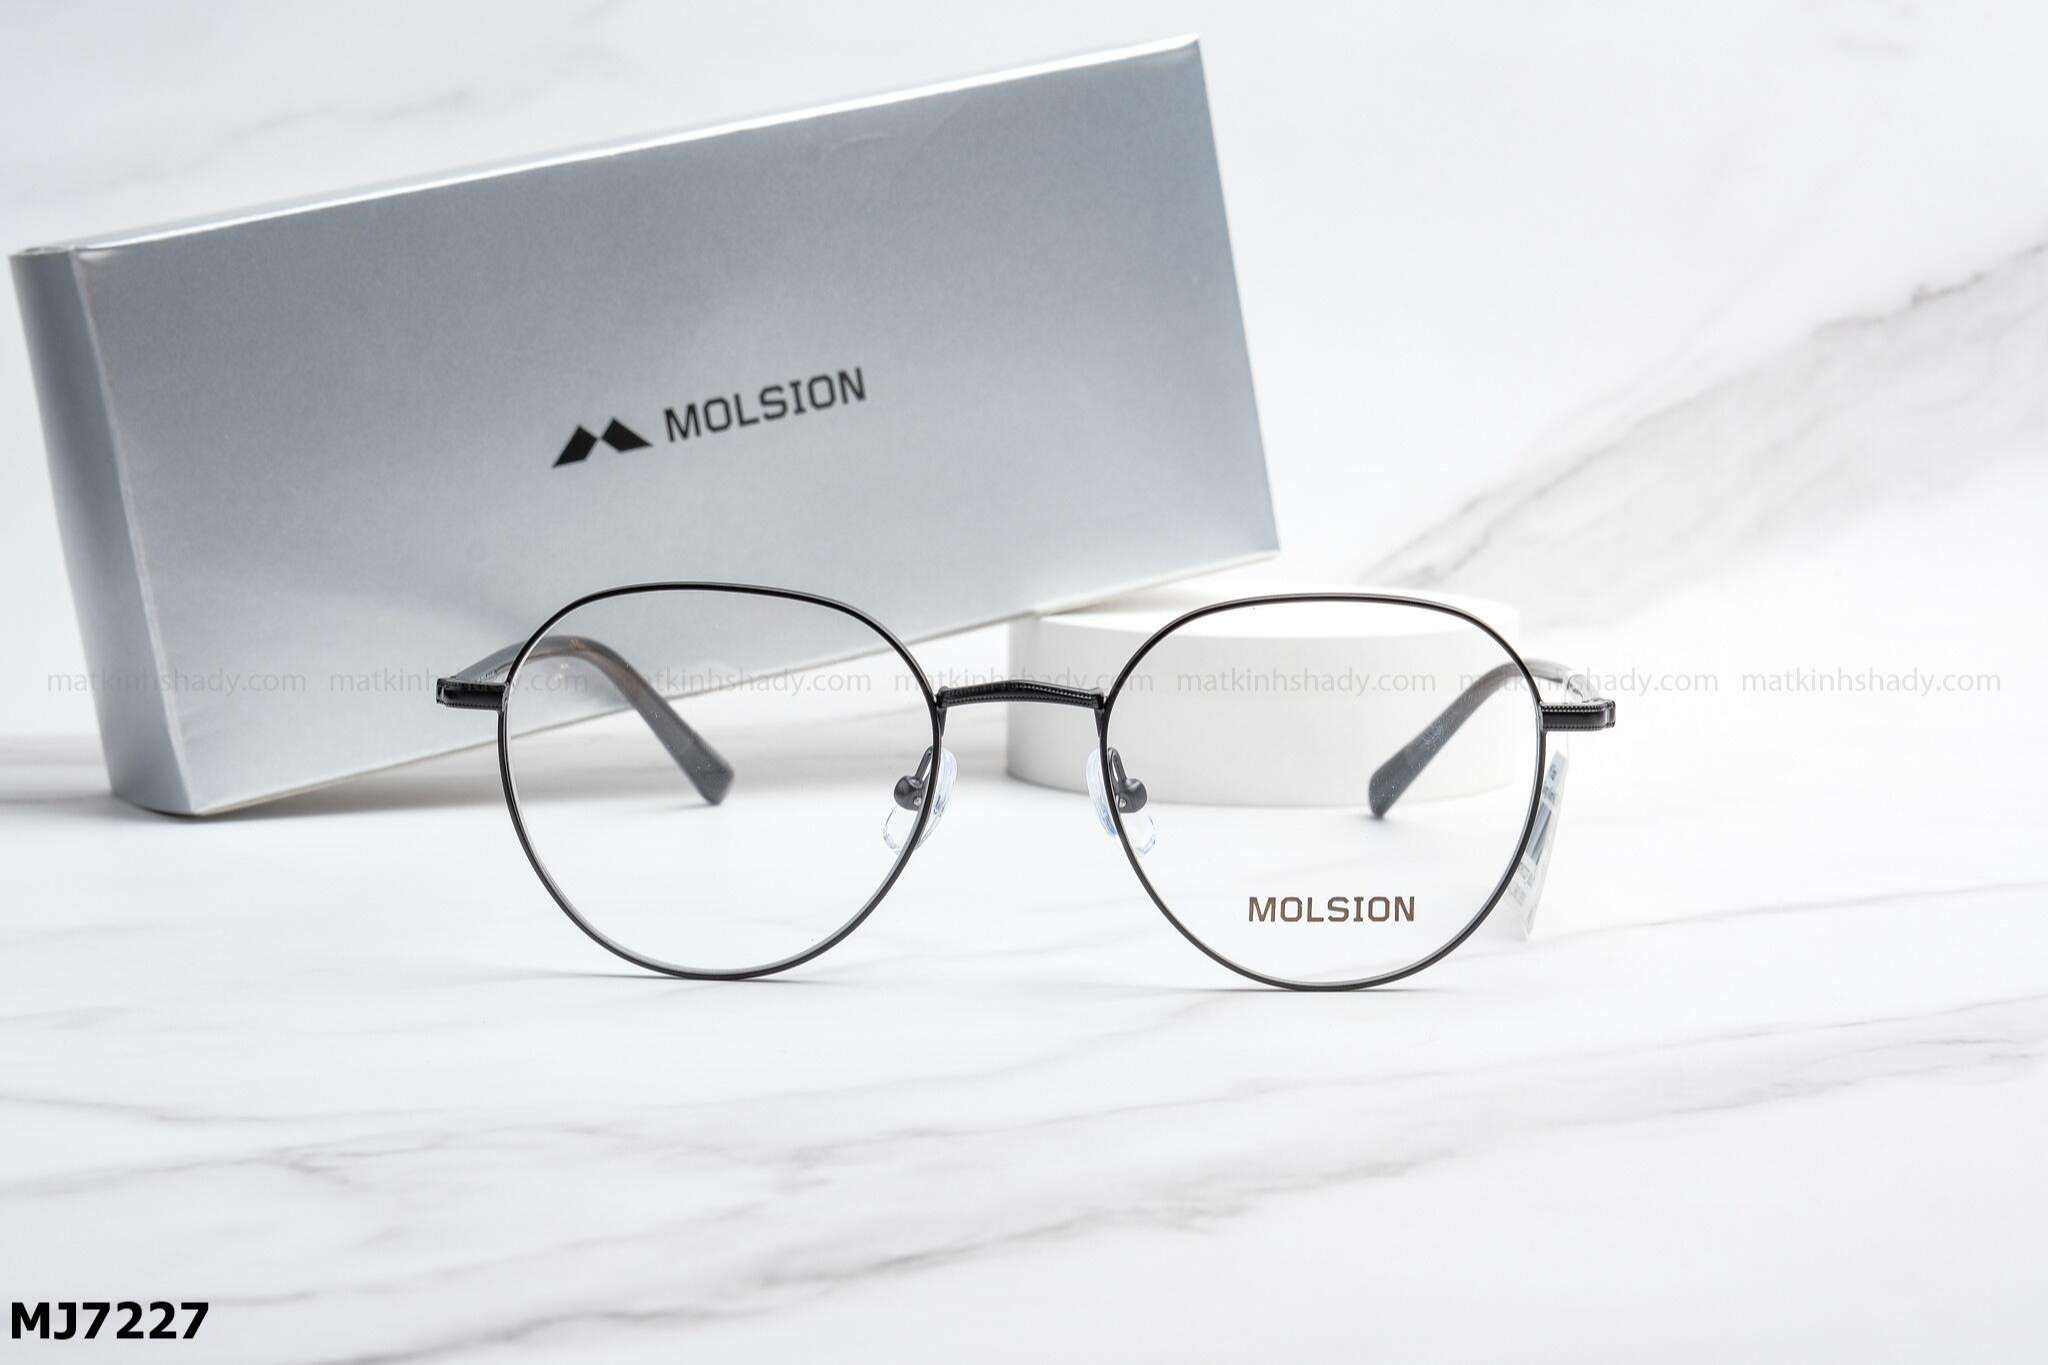  Molsion Eyewear - Glasses - MJ7227 